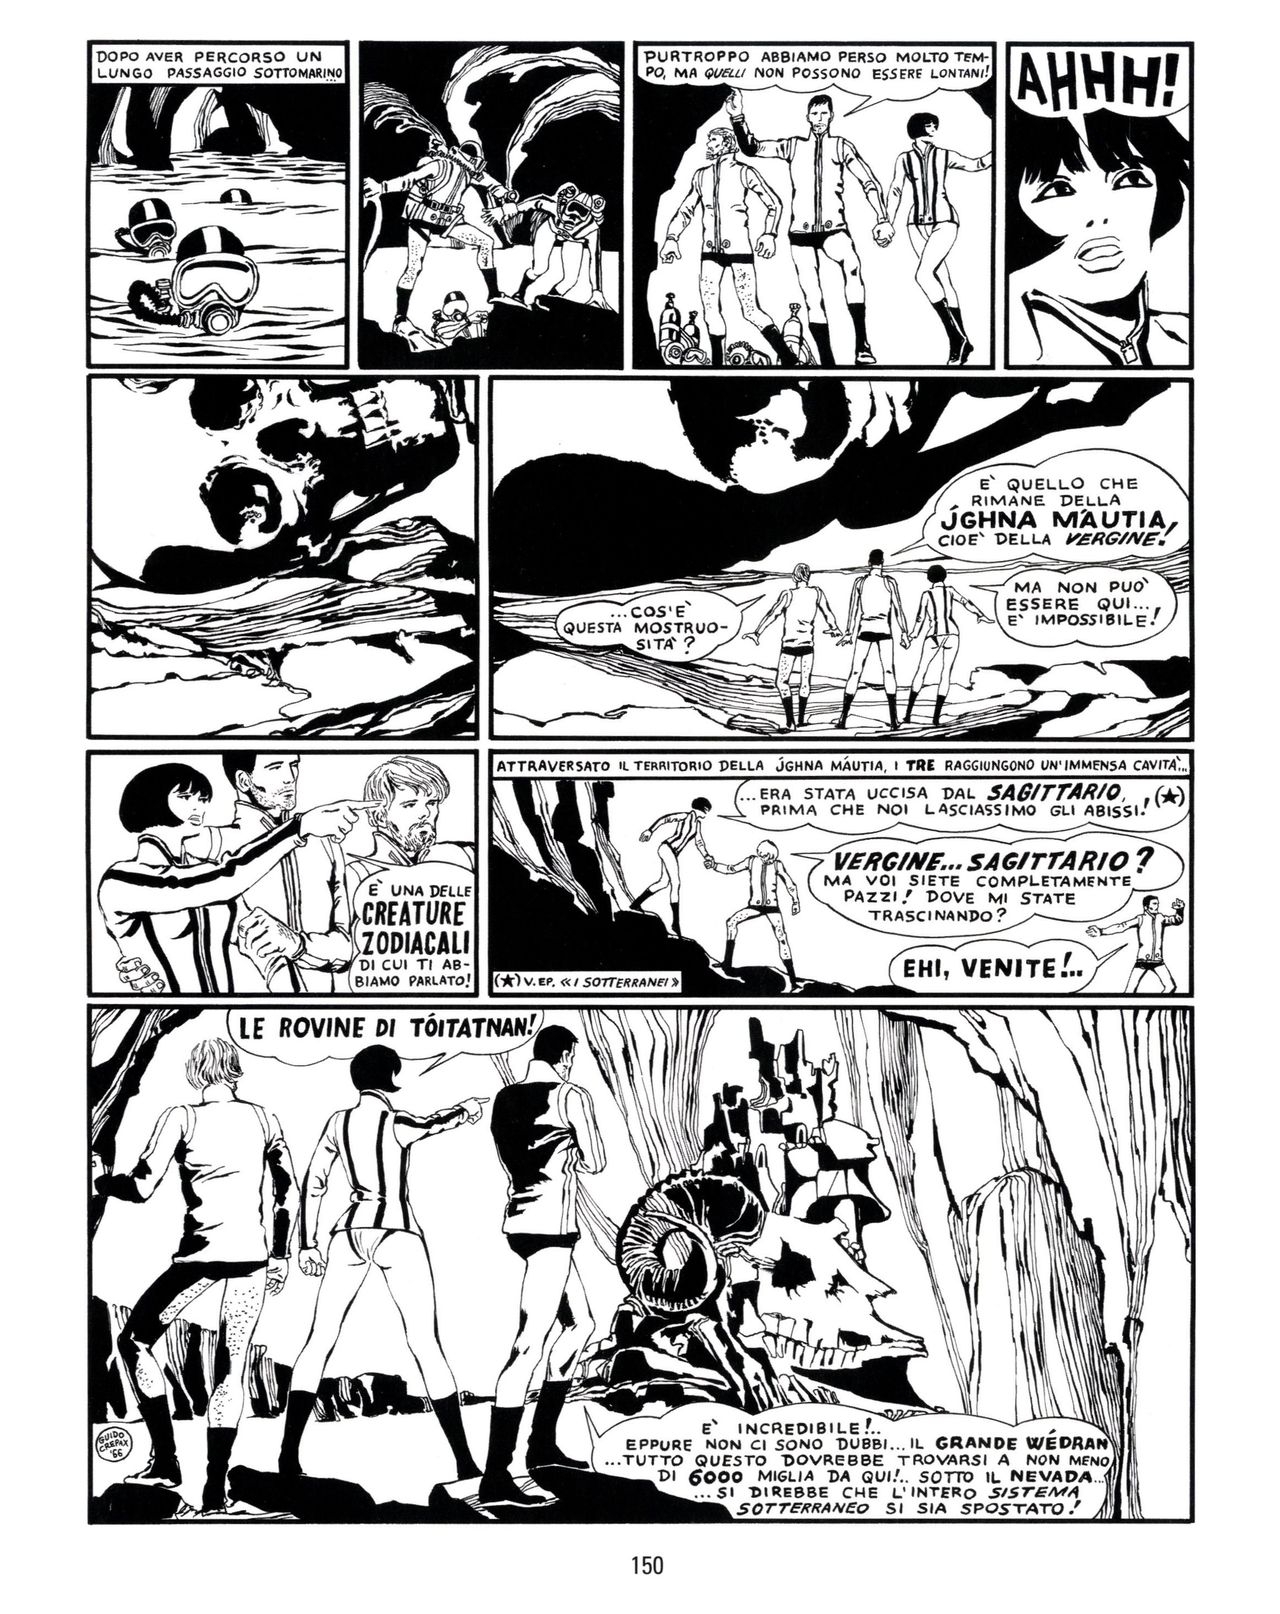 [Guido Crepax] Erotica Fumetti #25 : L'ascesa dei sotterranei : I cavalieri ciechi [Italian] 151